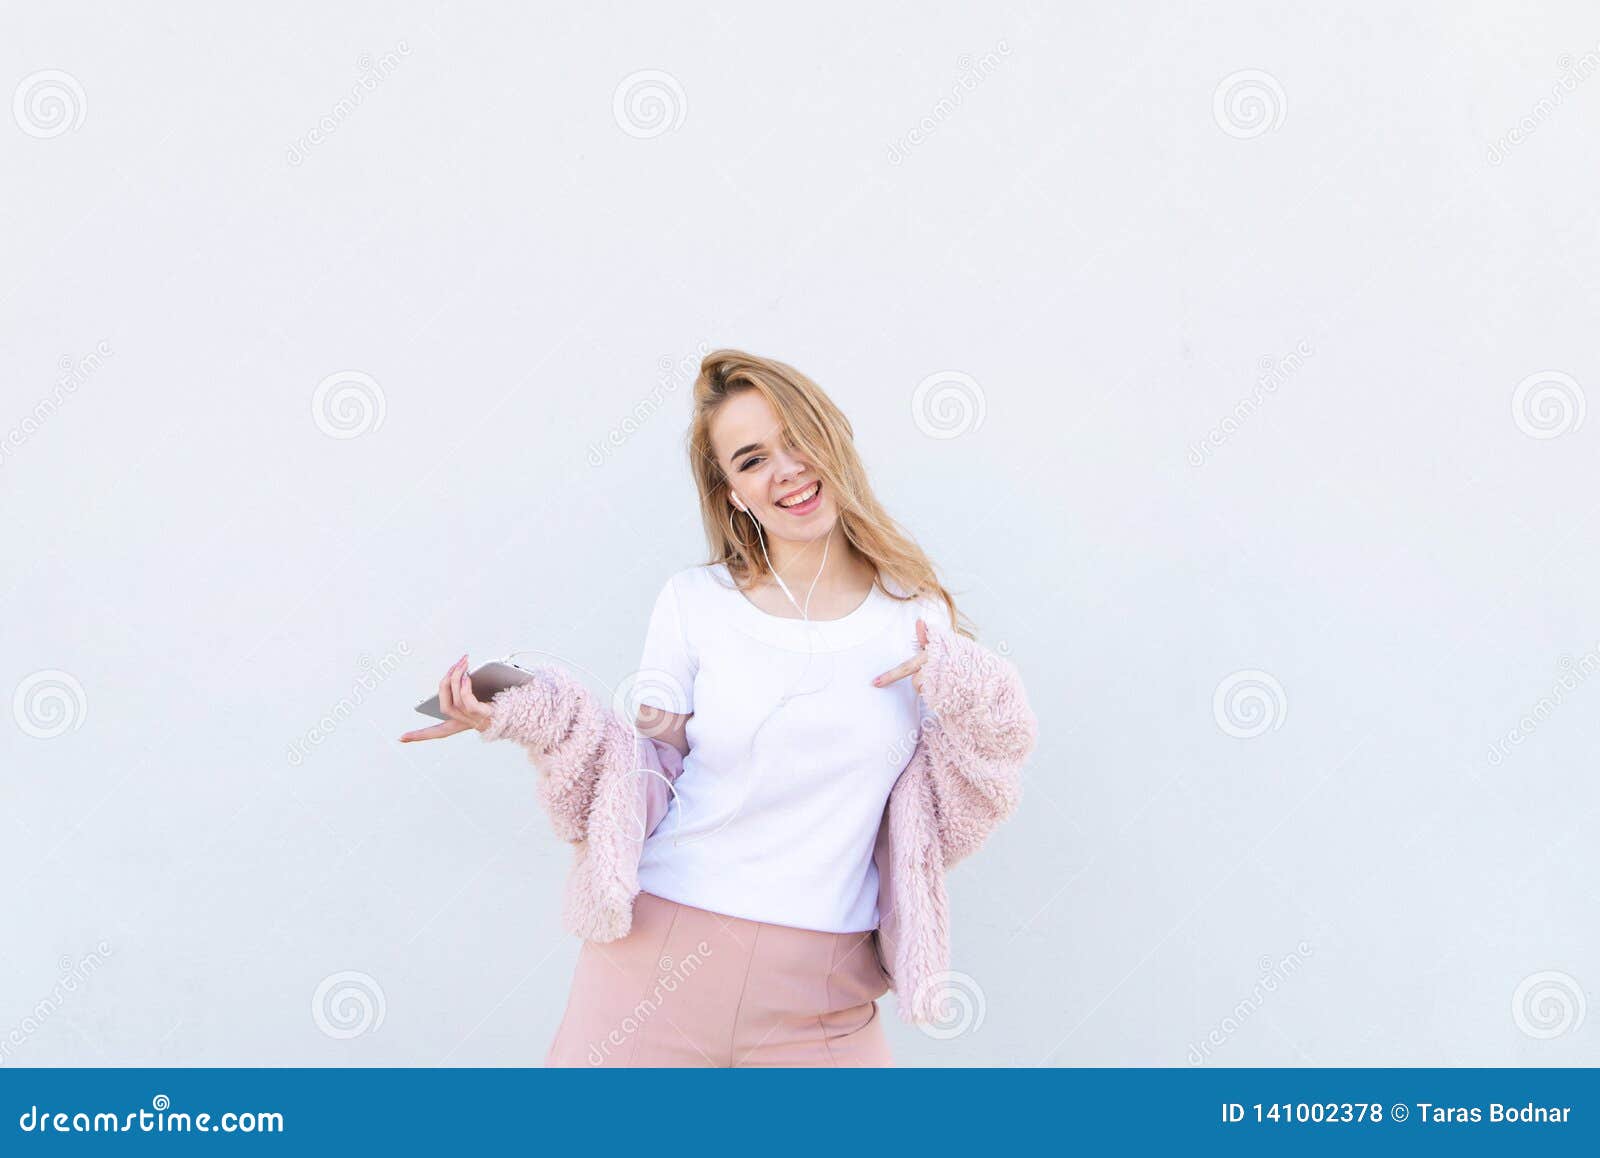 Blonde Teen In A Pink T Shirt